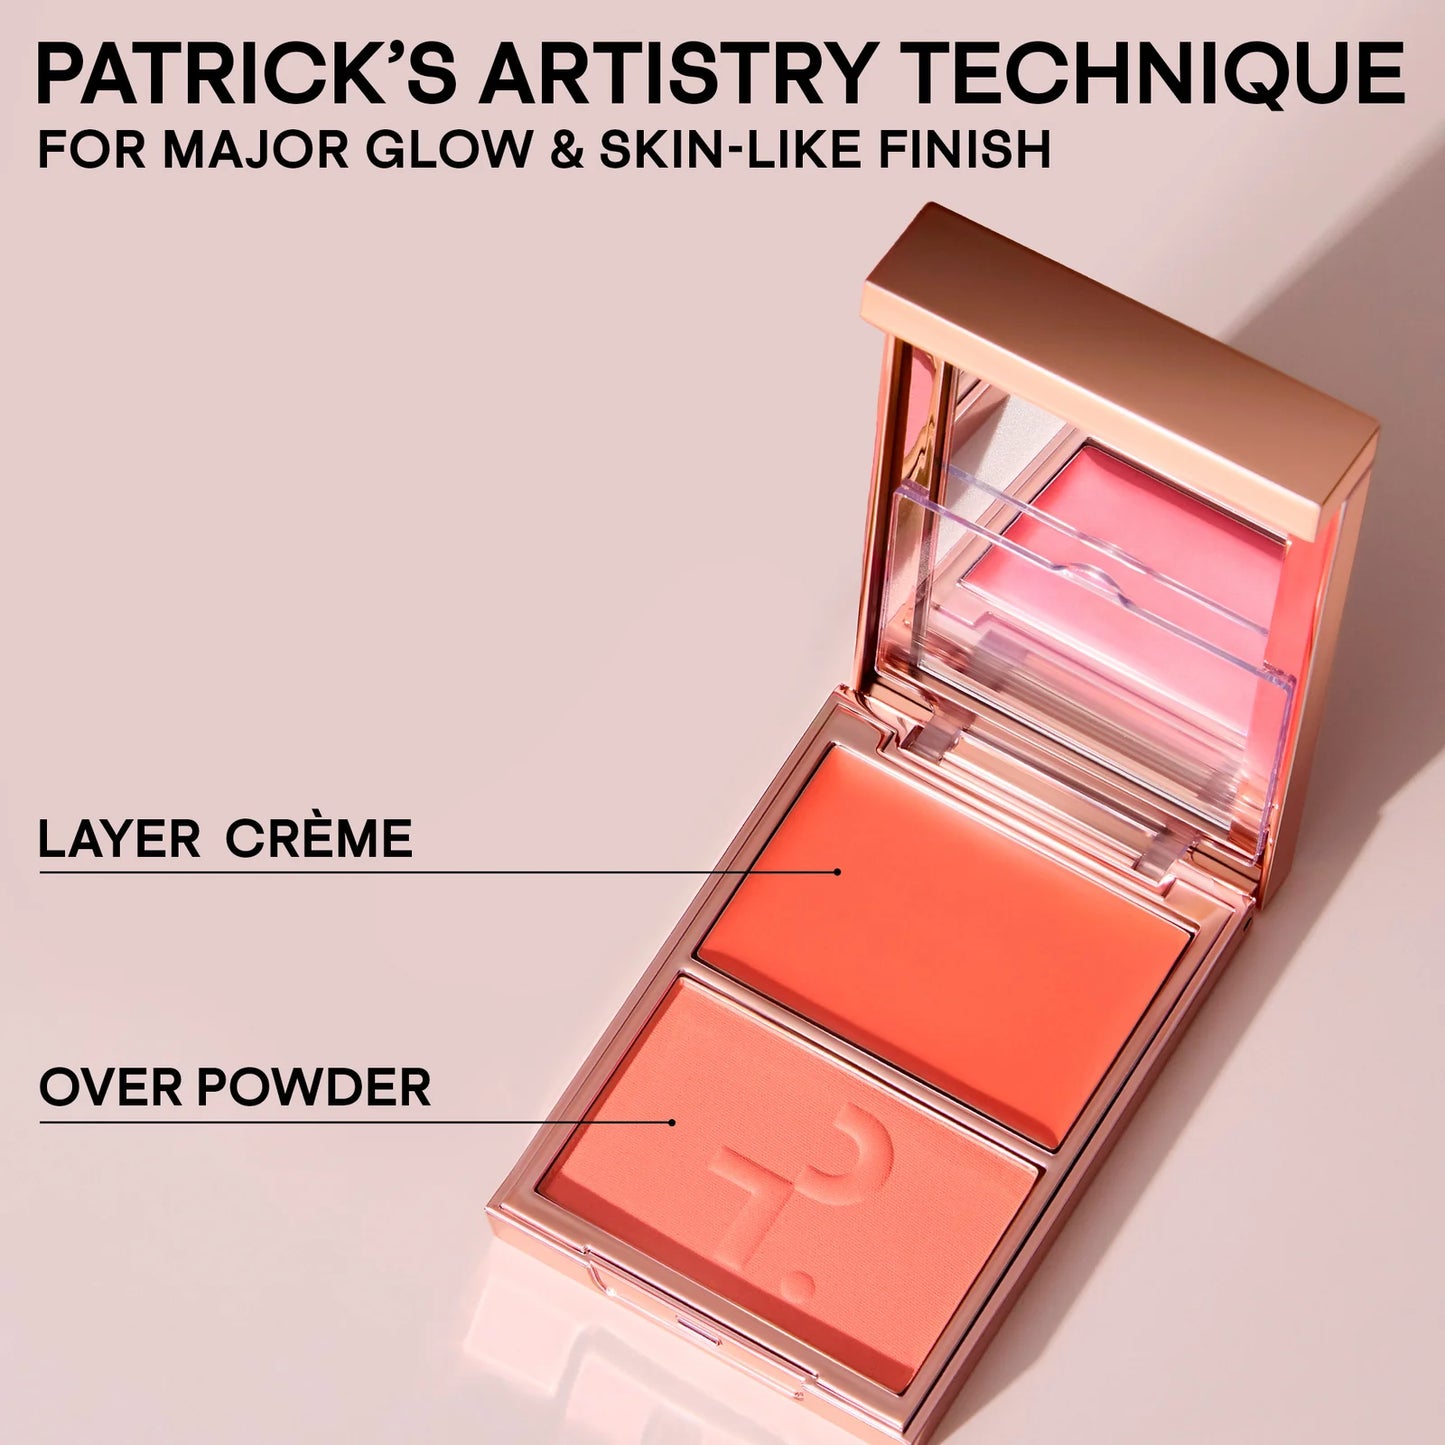 Pre Venta: PatrickTa | Major Beauty Headlines - Double-Take Crème & Powder Blush | She's That Girl